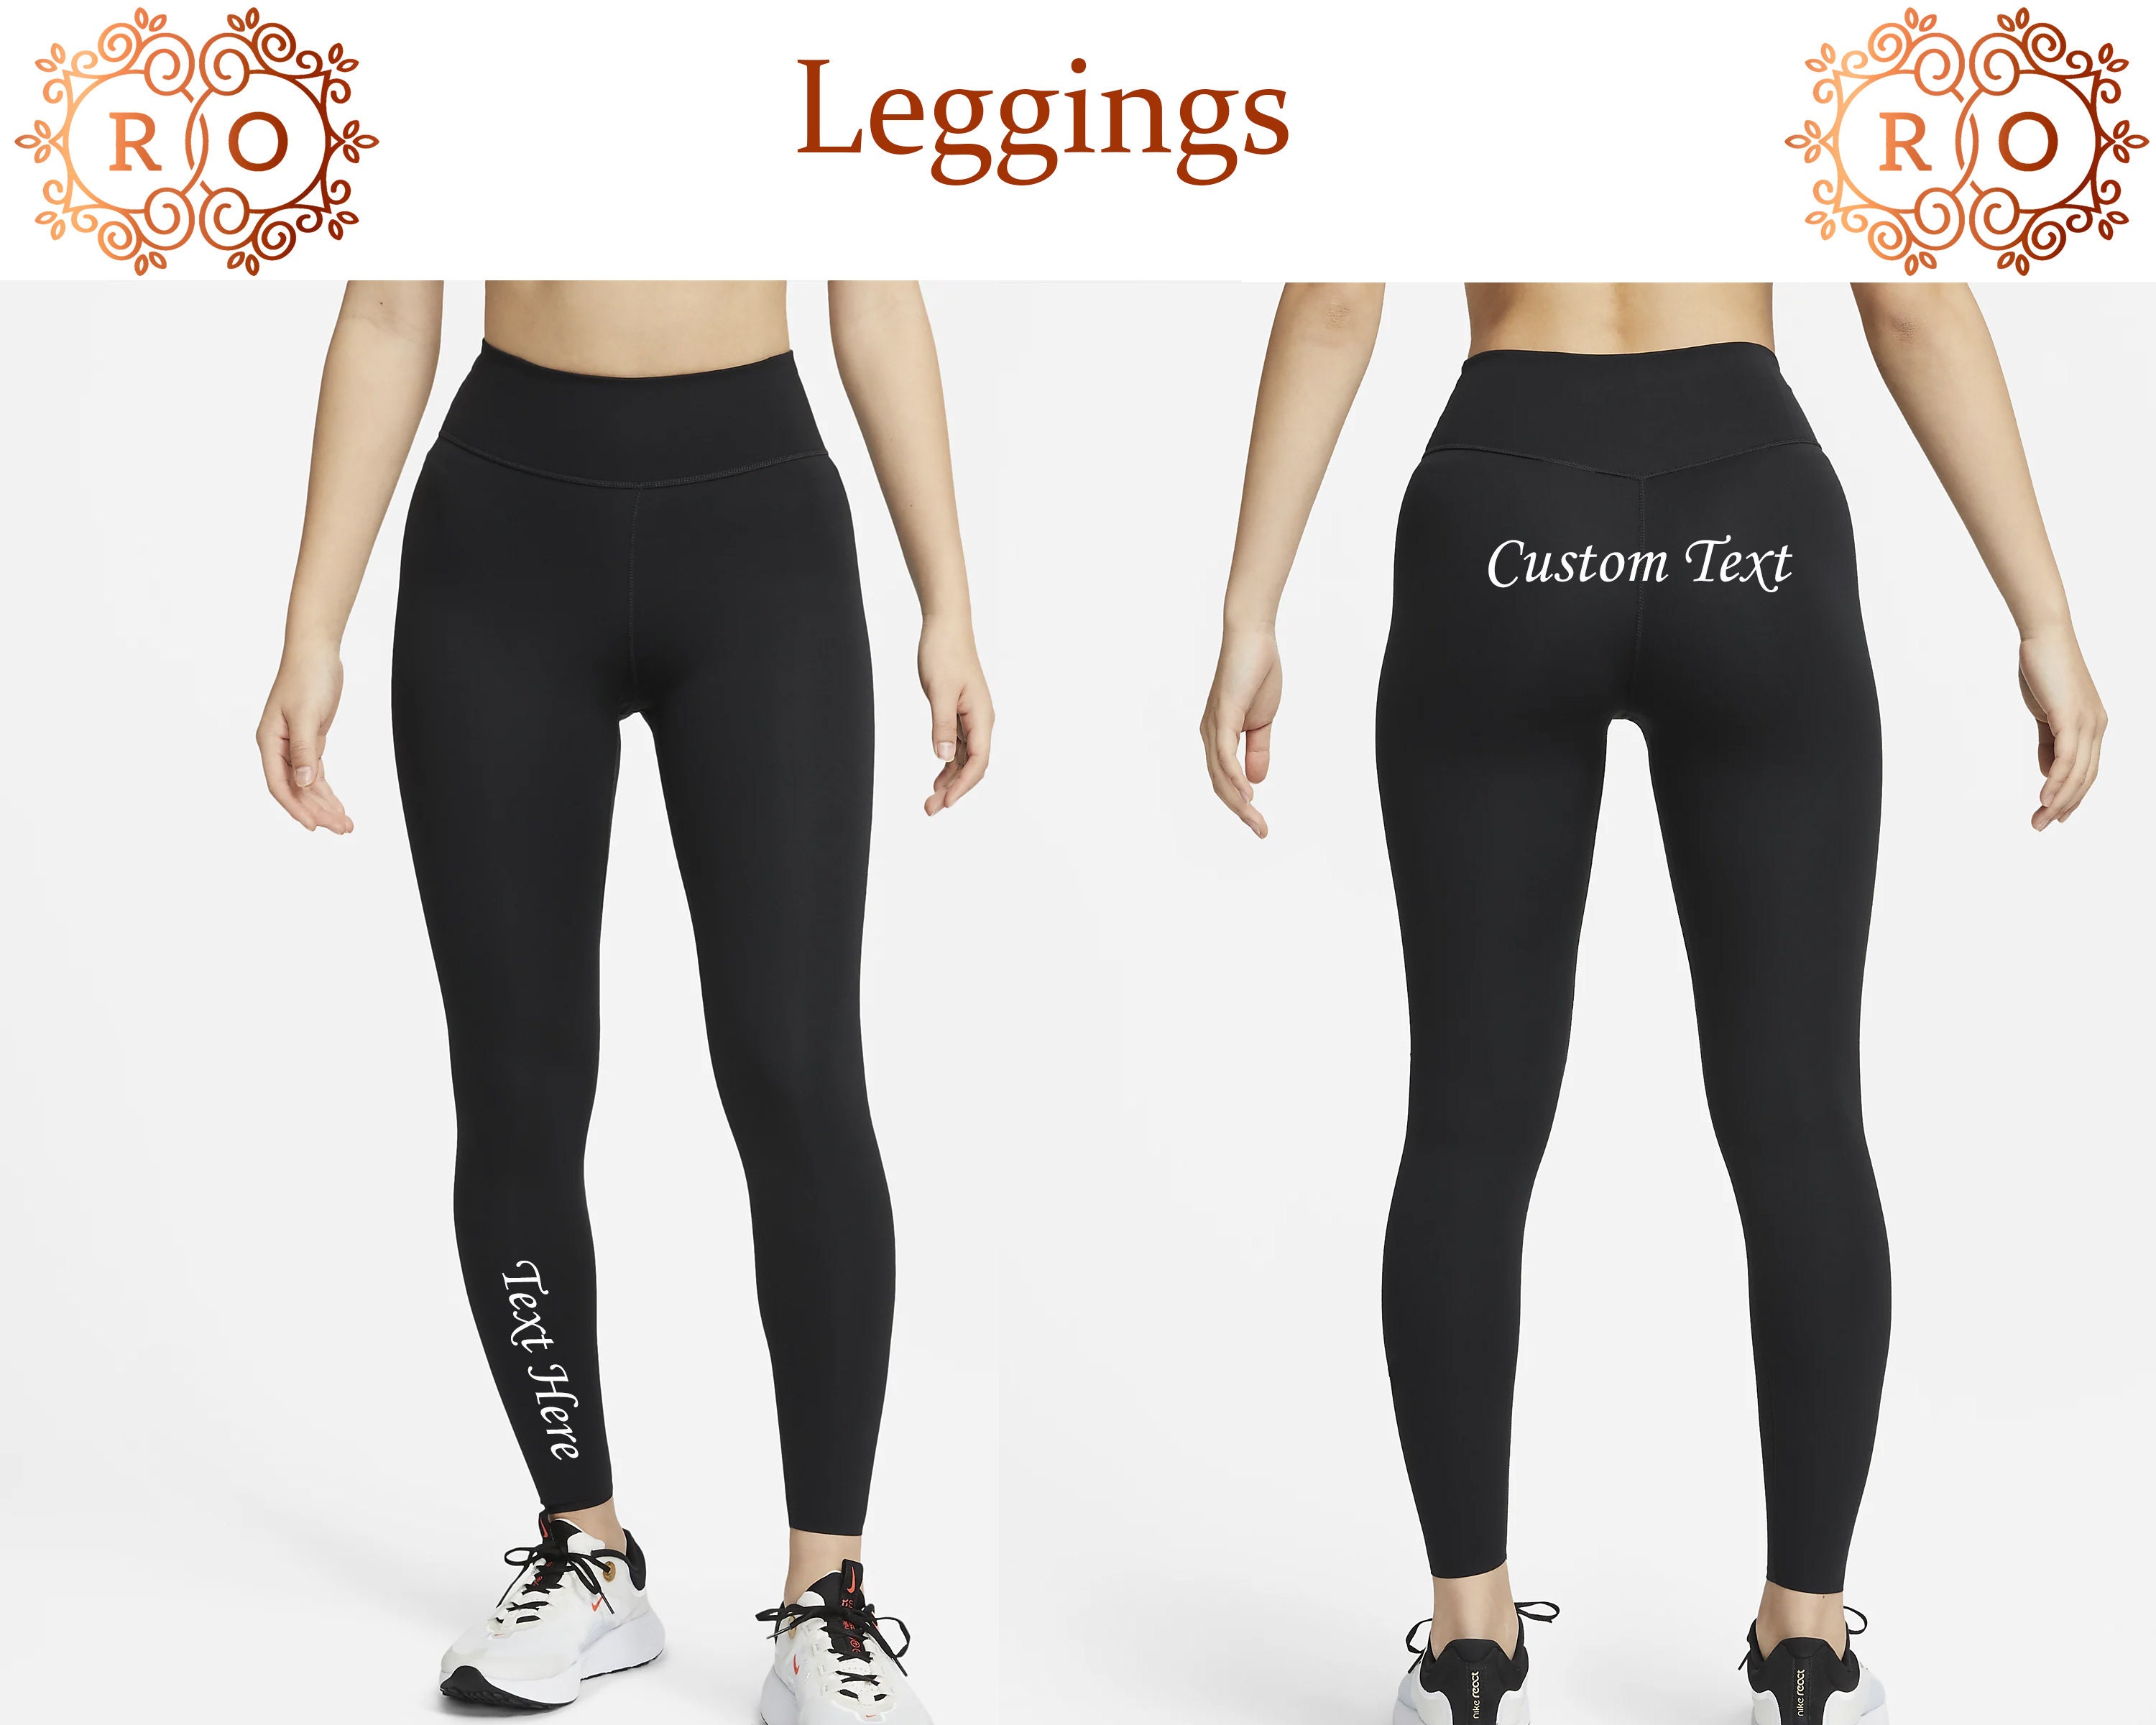 Customized Leggings Personalized Leggings Workout Leggings Yoga